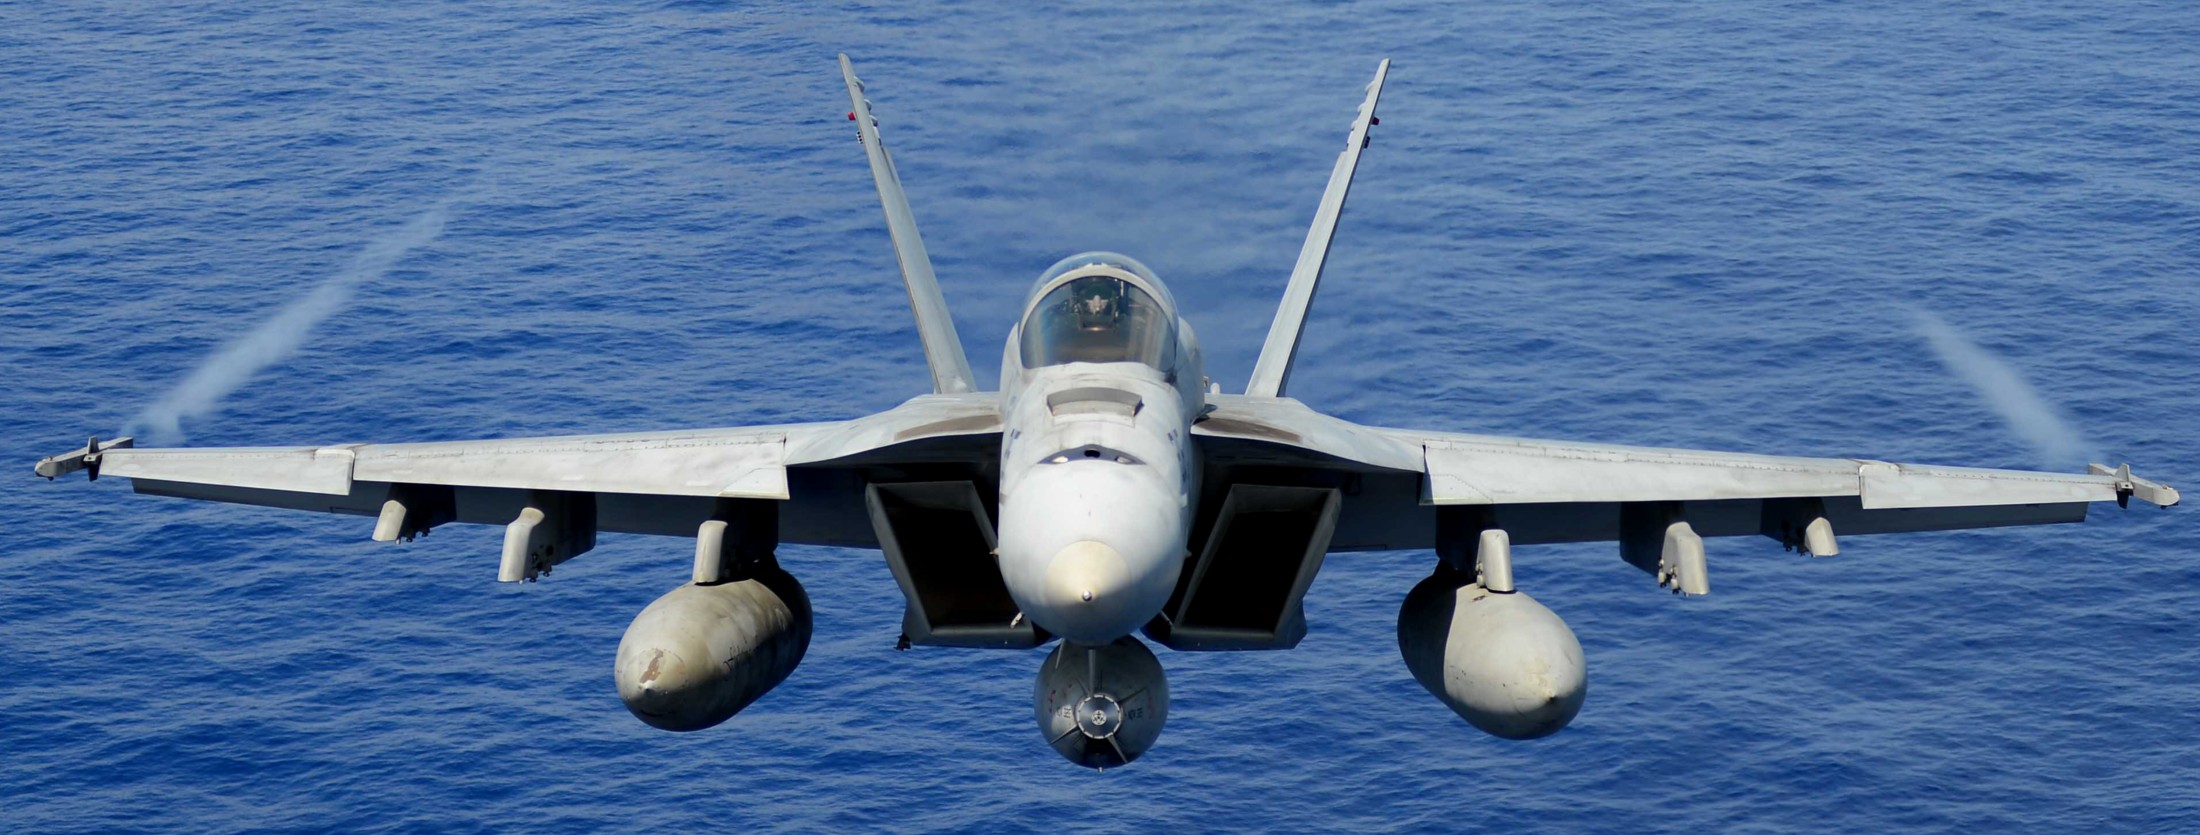 vfa-14 tophatters strike fighter squadron f/a-18e super hornet cvn-74 uss john c. stennis cvw-9 us navy 15